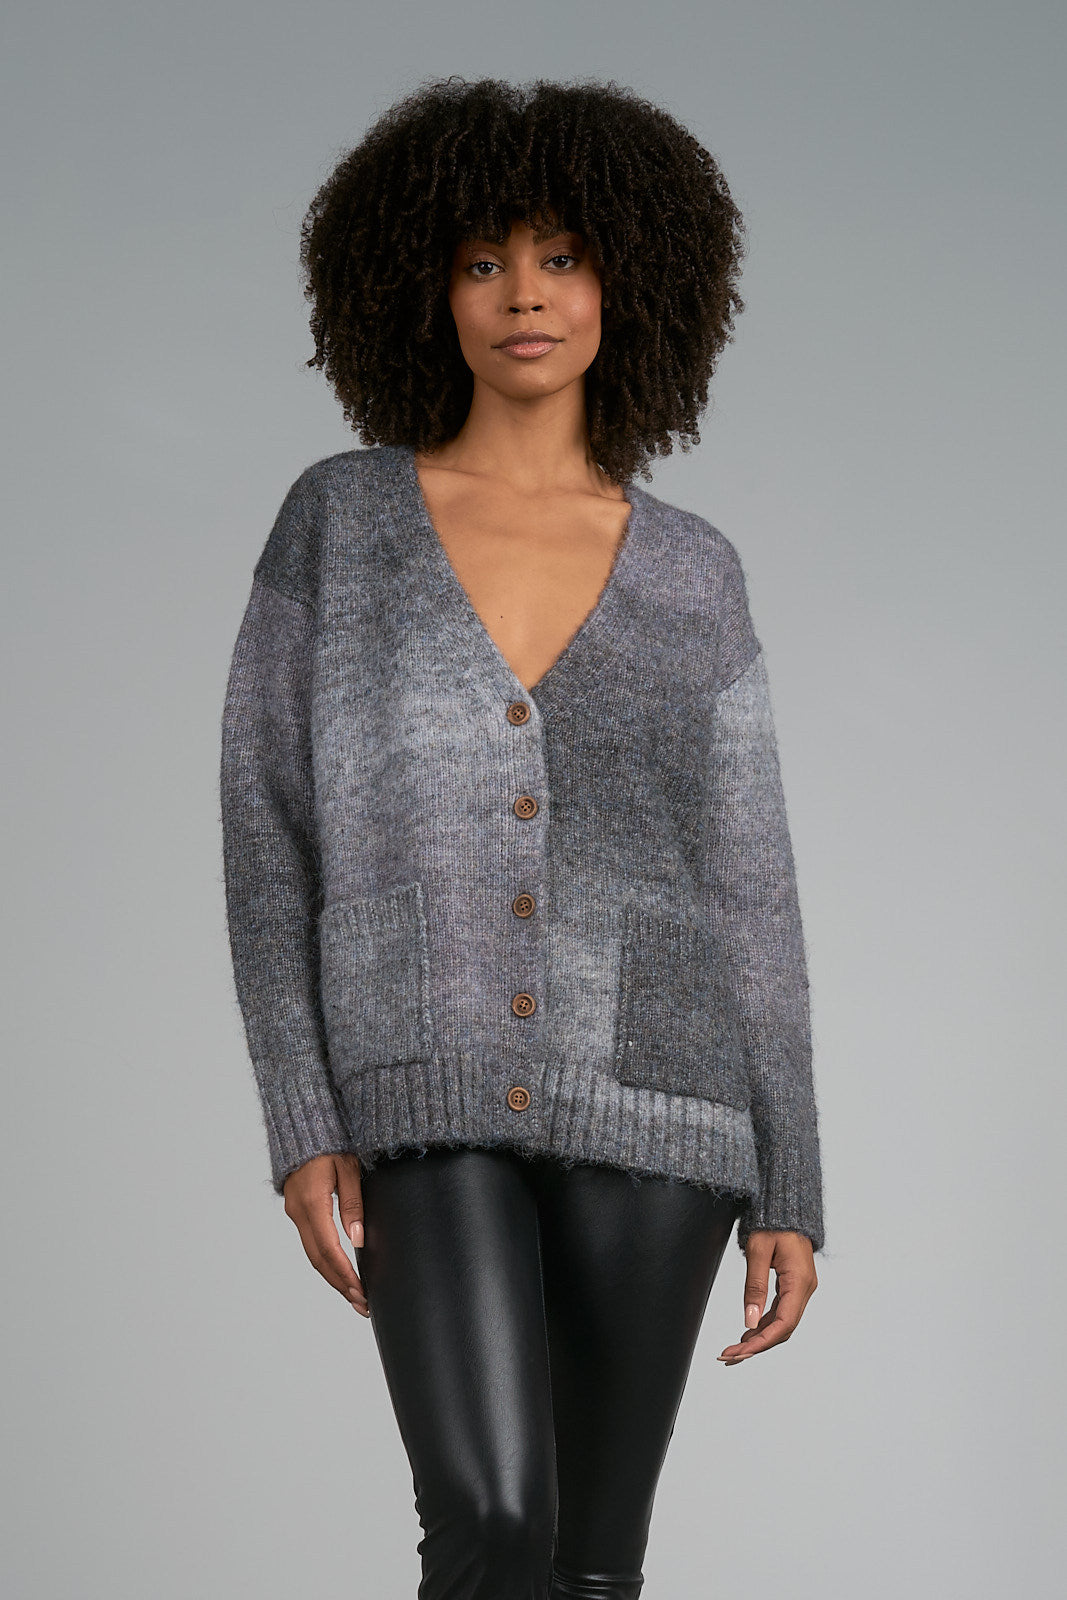 ig - paulaherbert_  Sweater vest outfit women, Sweater vest